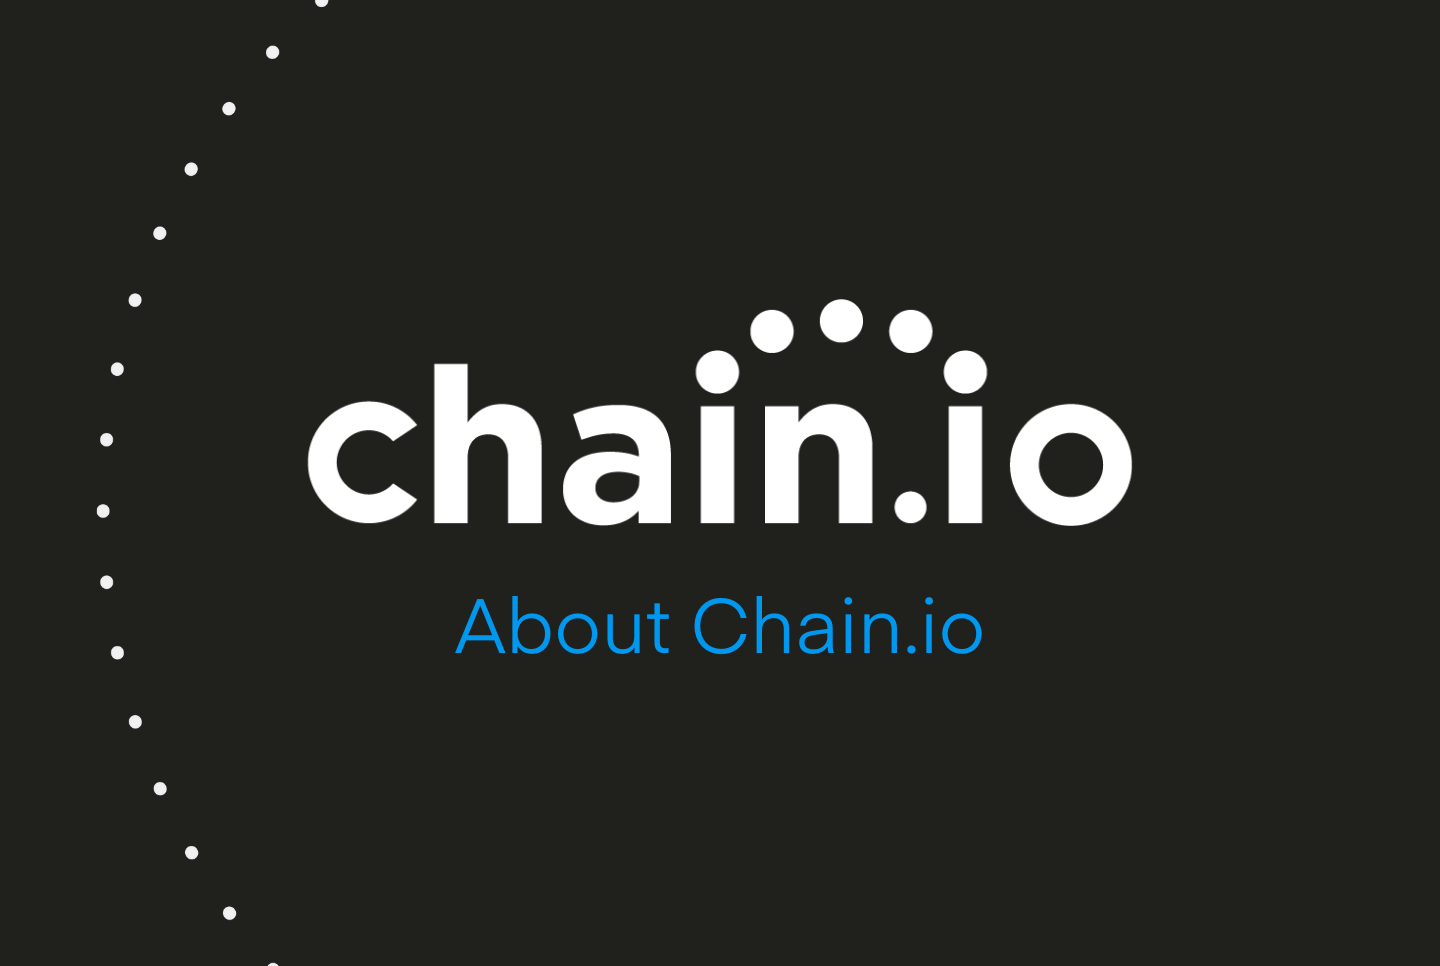 About Chain.io - Chain.io logo on black background